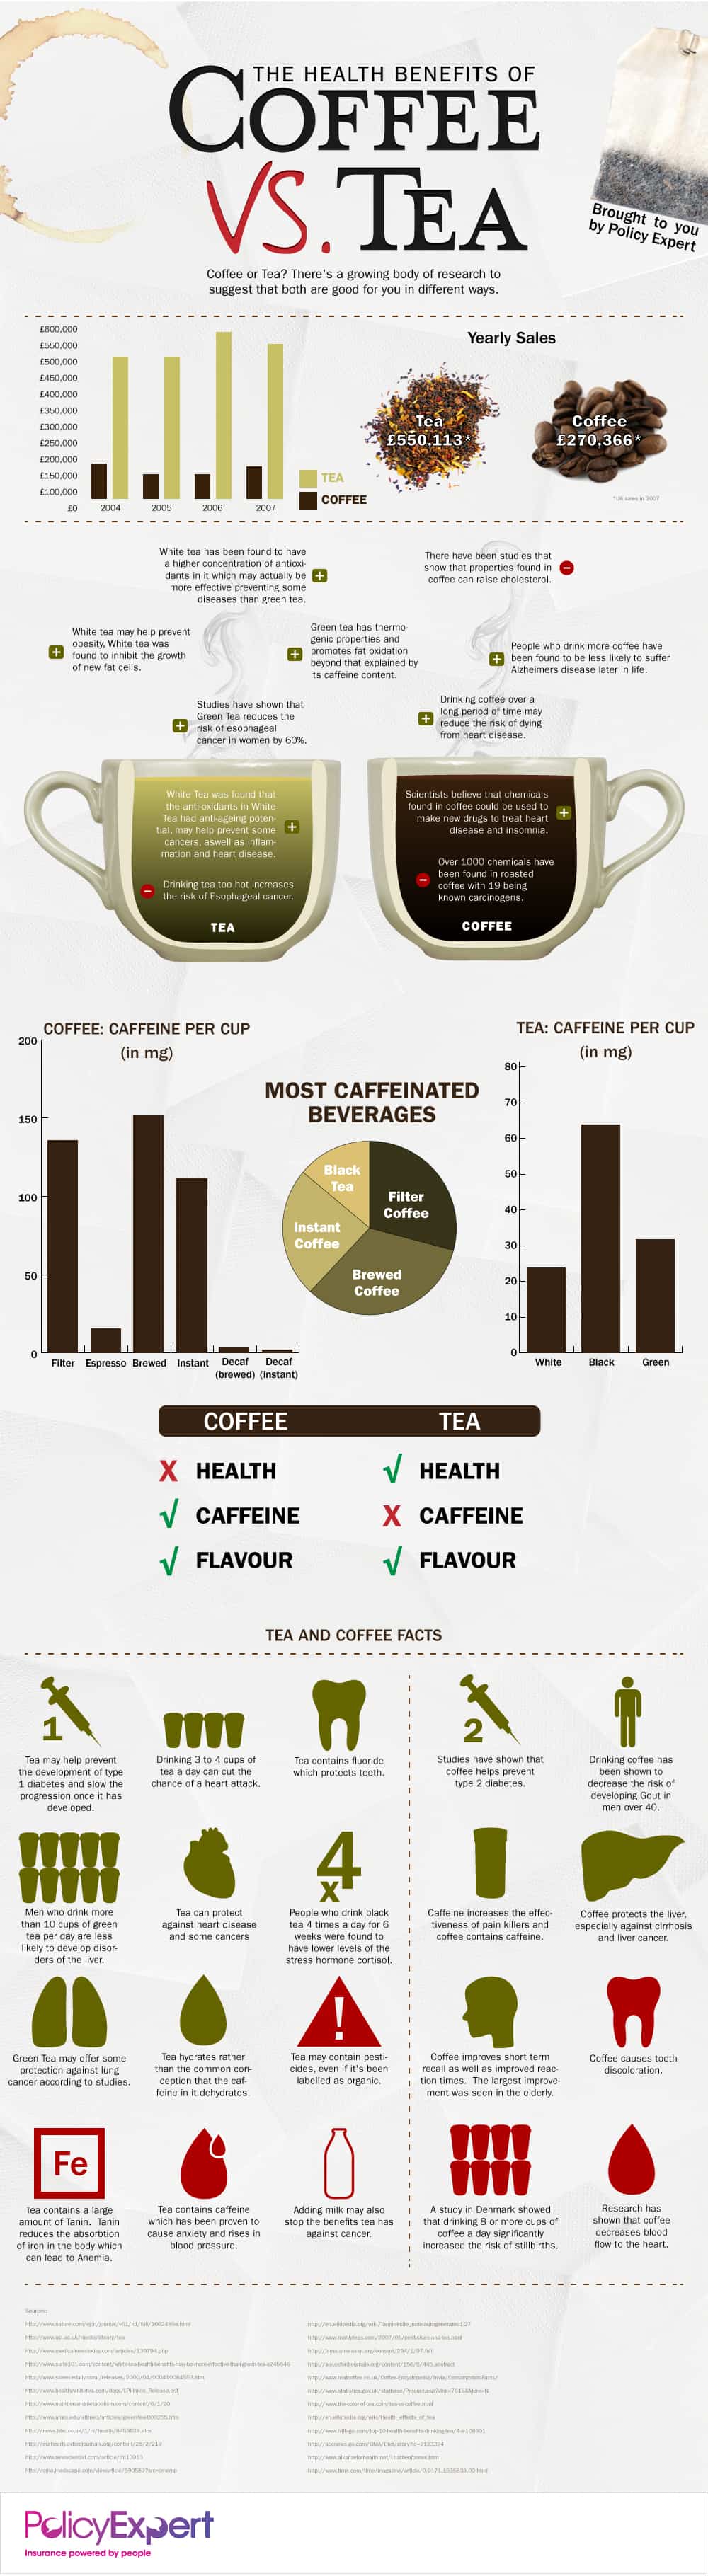 Coffee versus Tea